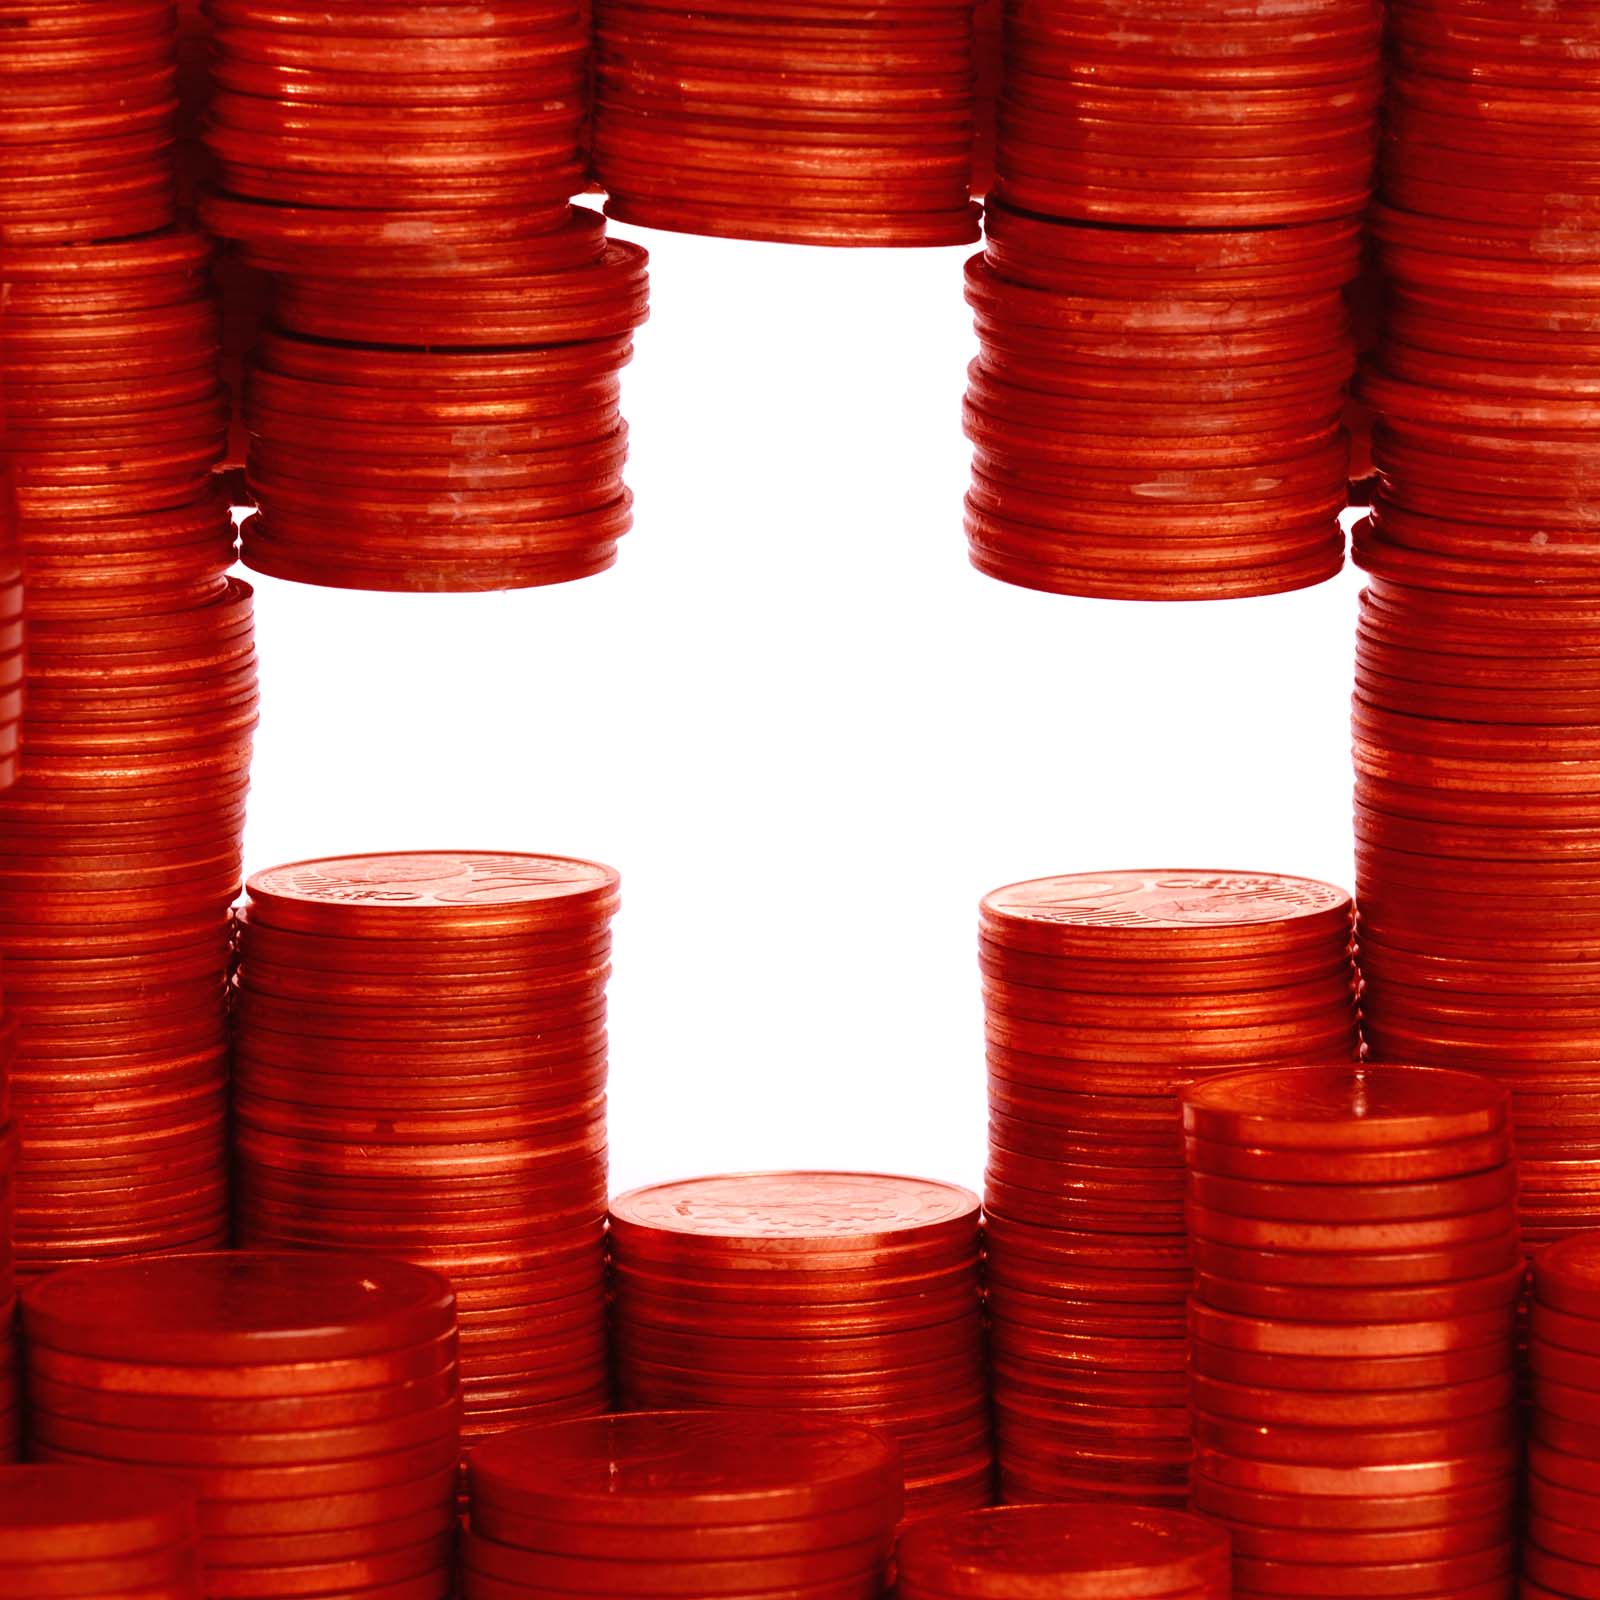 Bitcoin in Brief Saturday: Switzerland Votes on “Sovereign Money” Referendum, Russian Banker Warns Against Crypto Ban